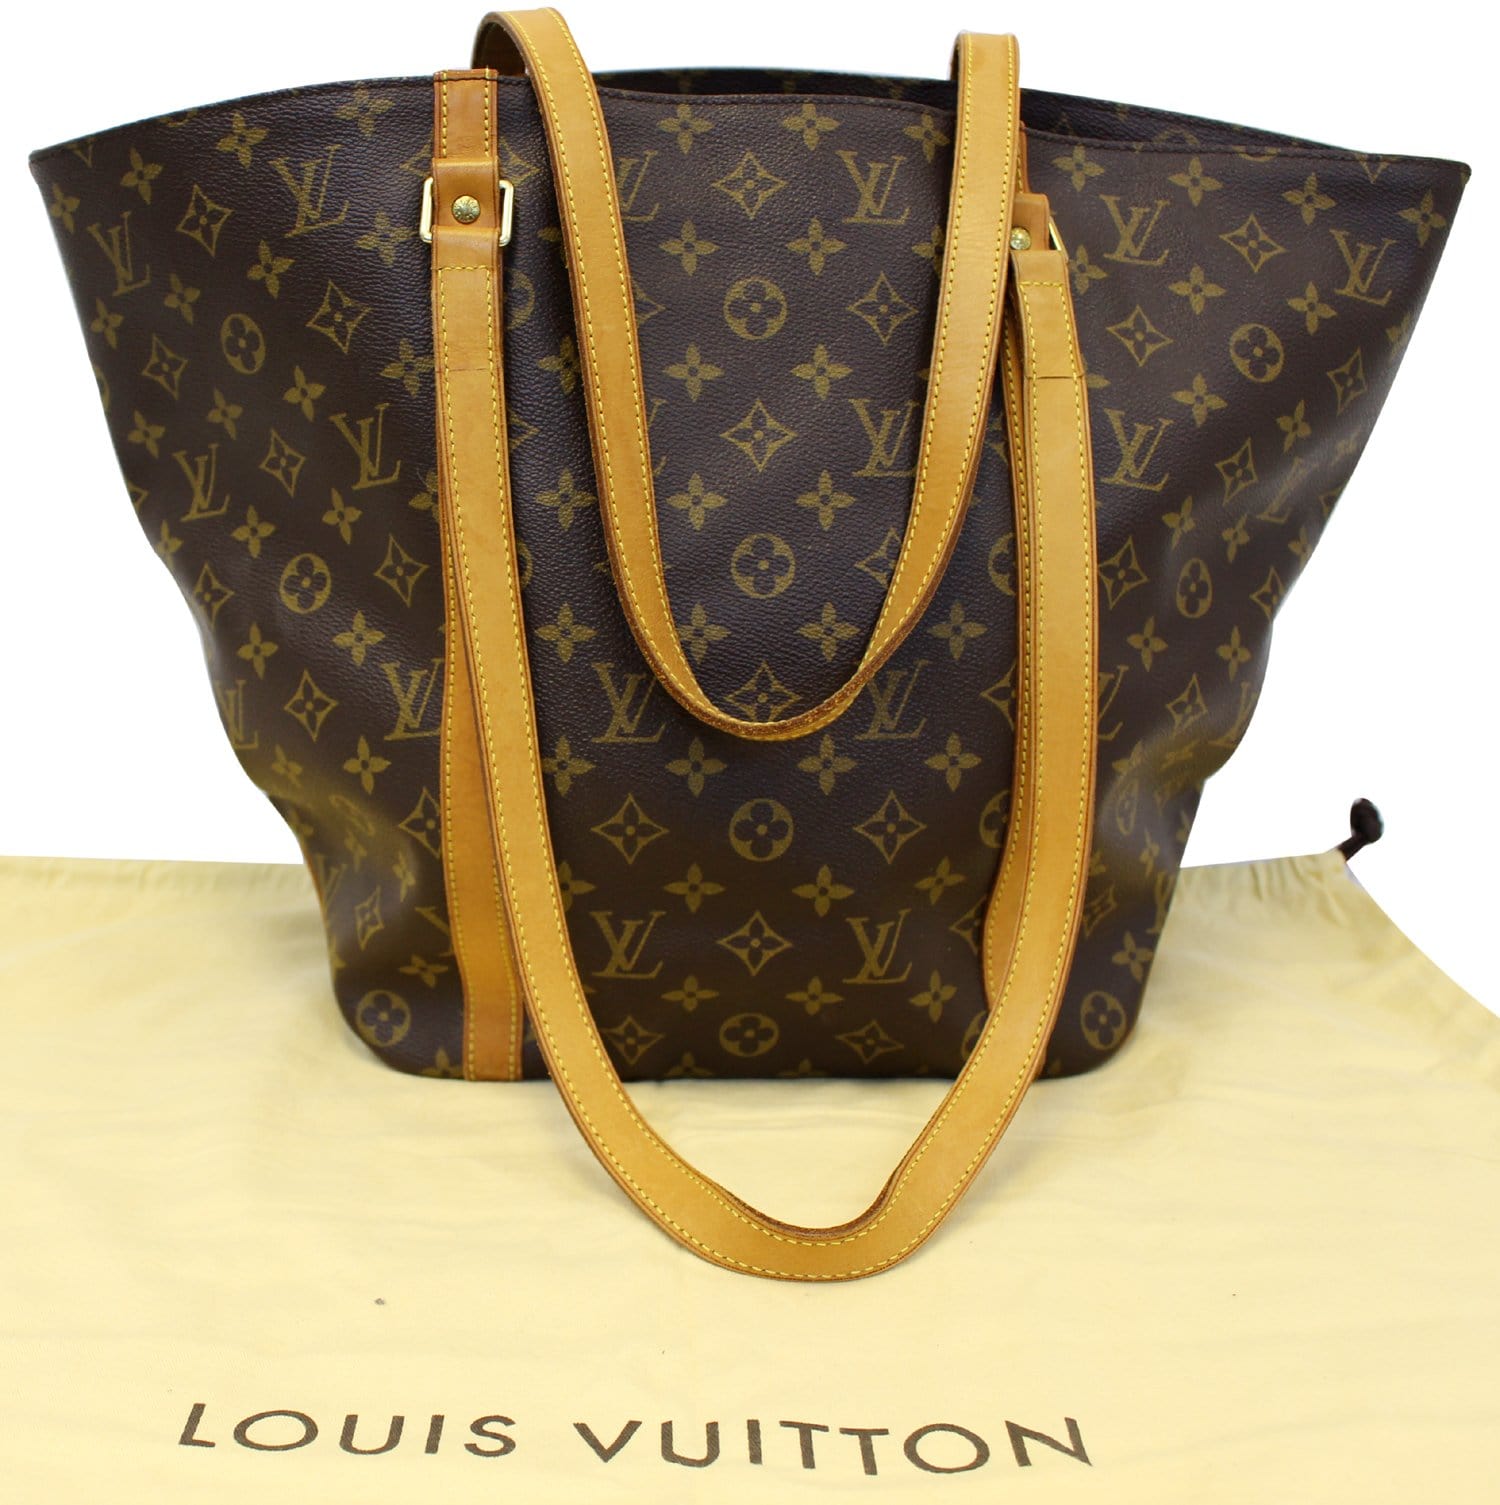 LOUIS VUITTON Monogram Canvas Sac Shopping Tote Bag